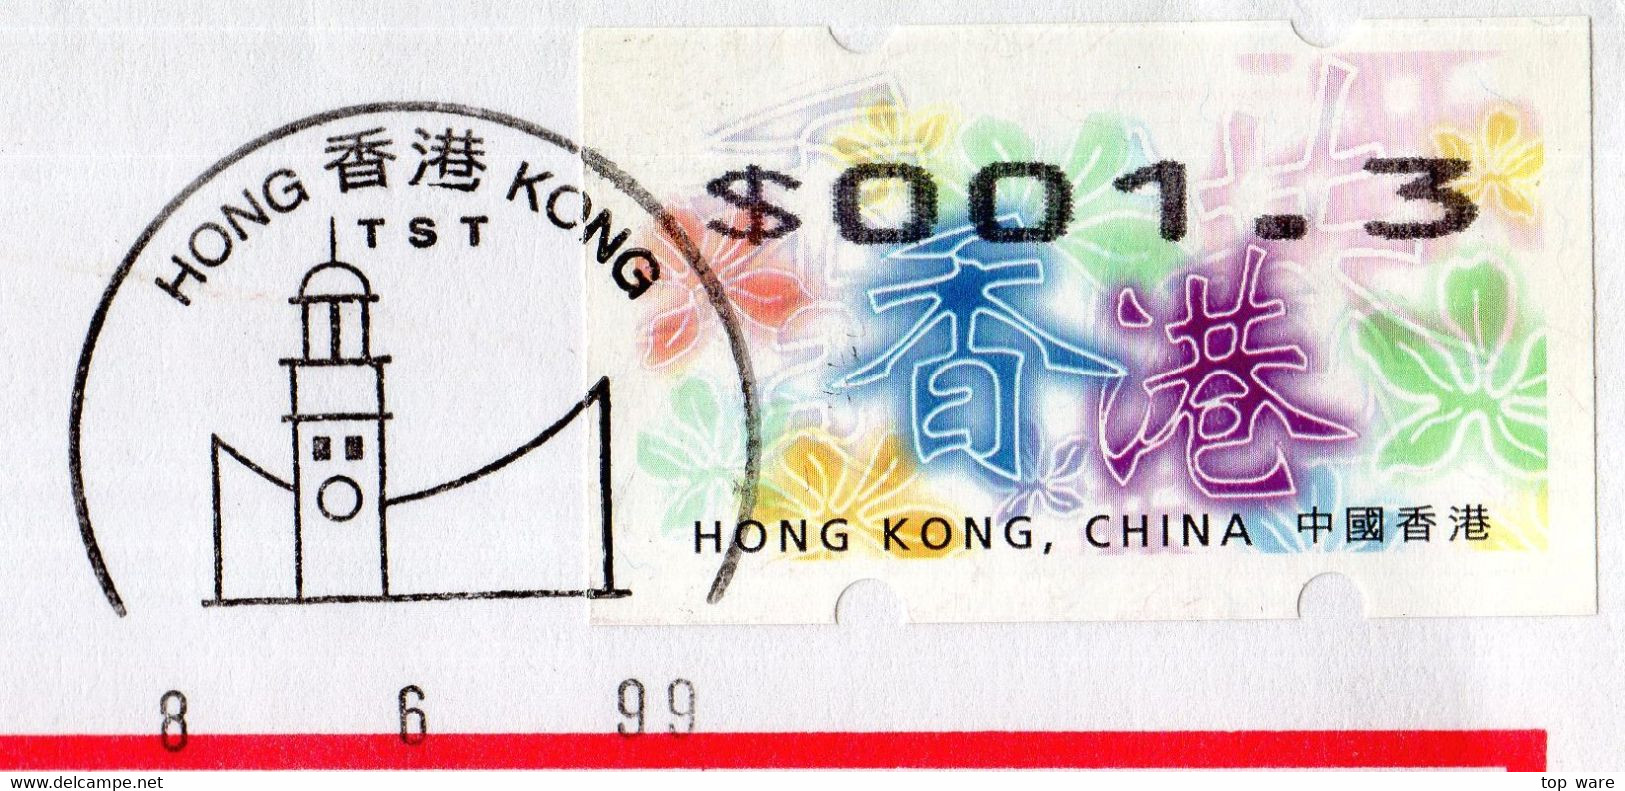 Hong Kong China ATM Stamps, 1998, Orchid Bloom Bauhinia, $1.30 On TST Letter 8.6.99 Receipt, Nagler N718, Frama Hongkong - Distributors